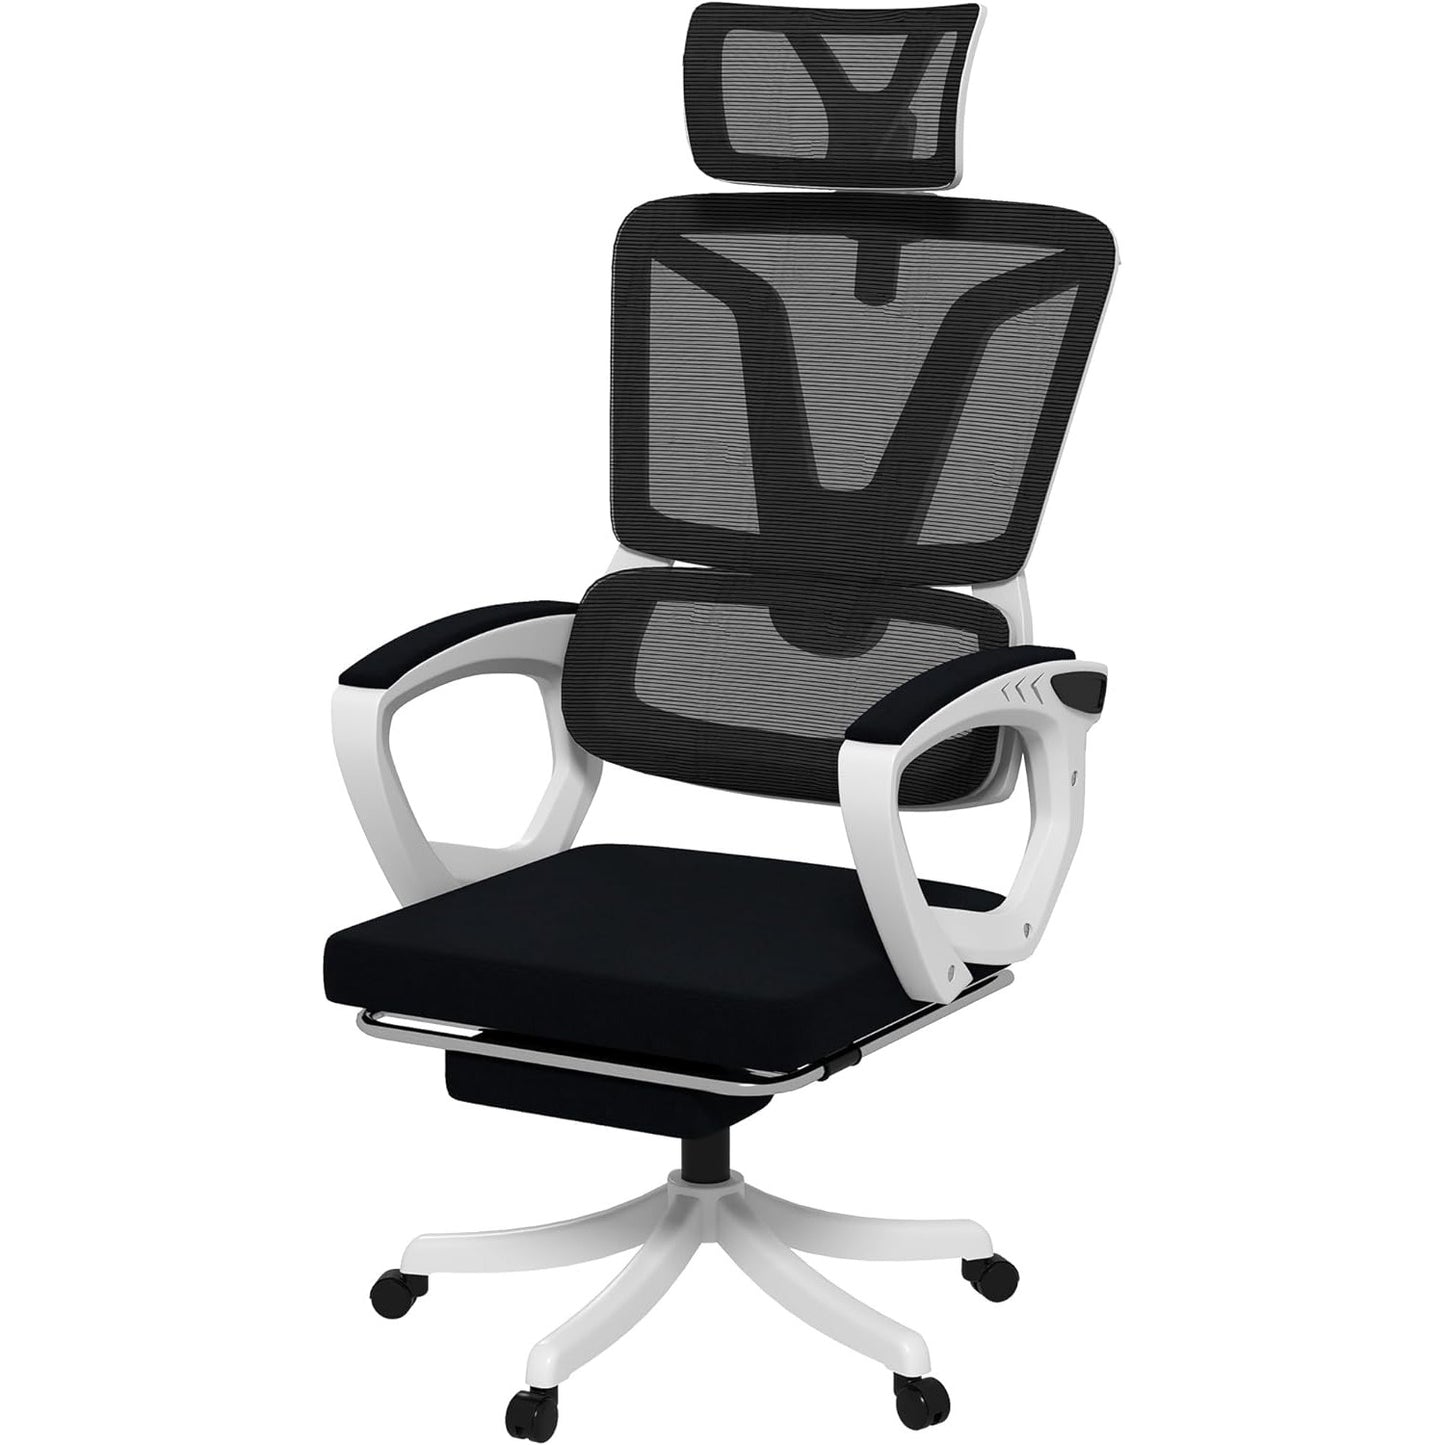 ProperAV Extra Ergonomic Reclining Adjustable Mesh Office Chair with Adjustable Headrest, Lumbar Support & Footrest - Black - maplin.co.uk